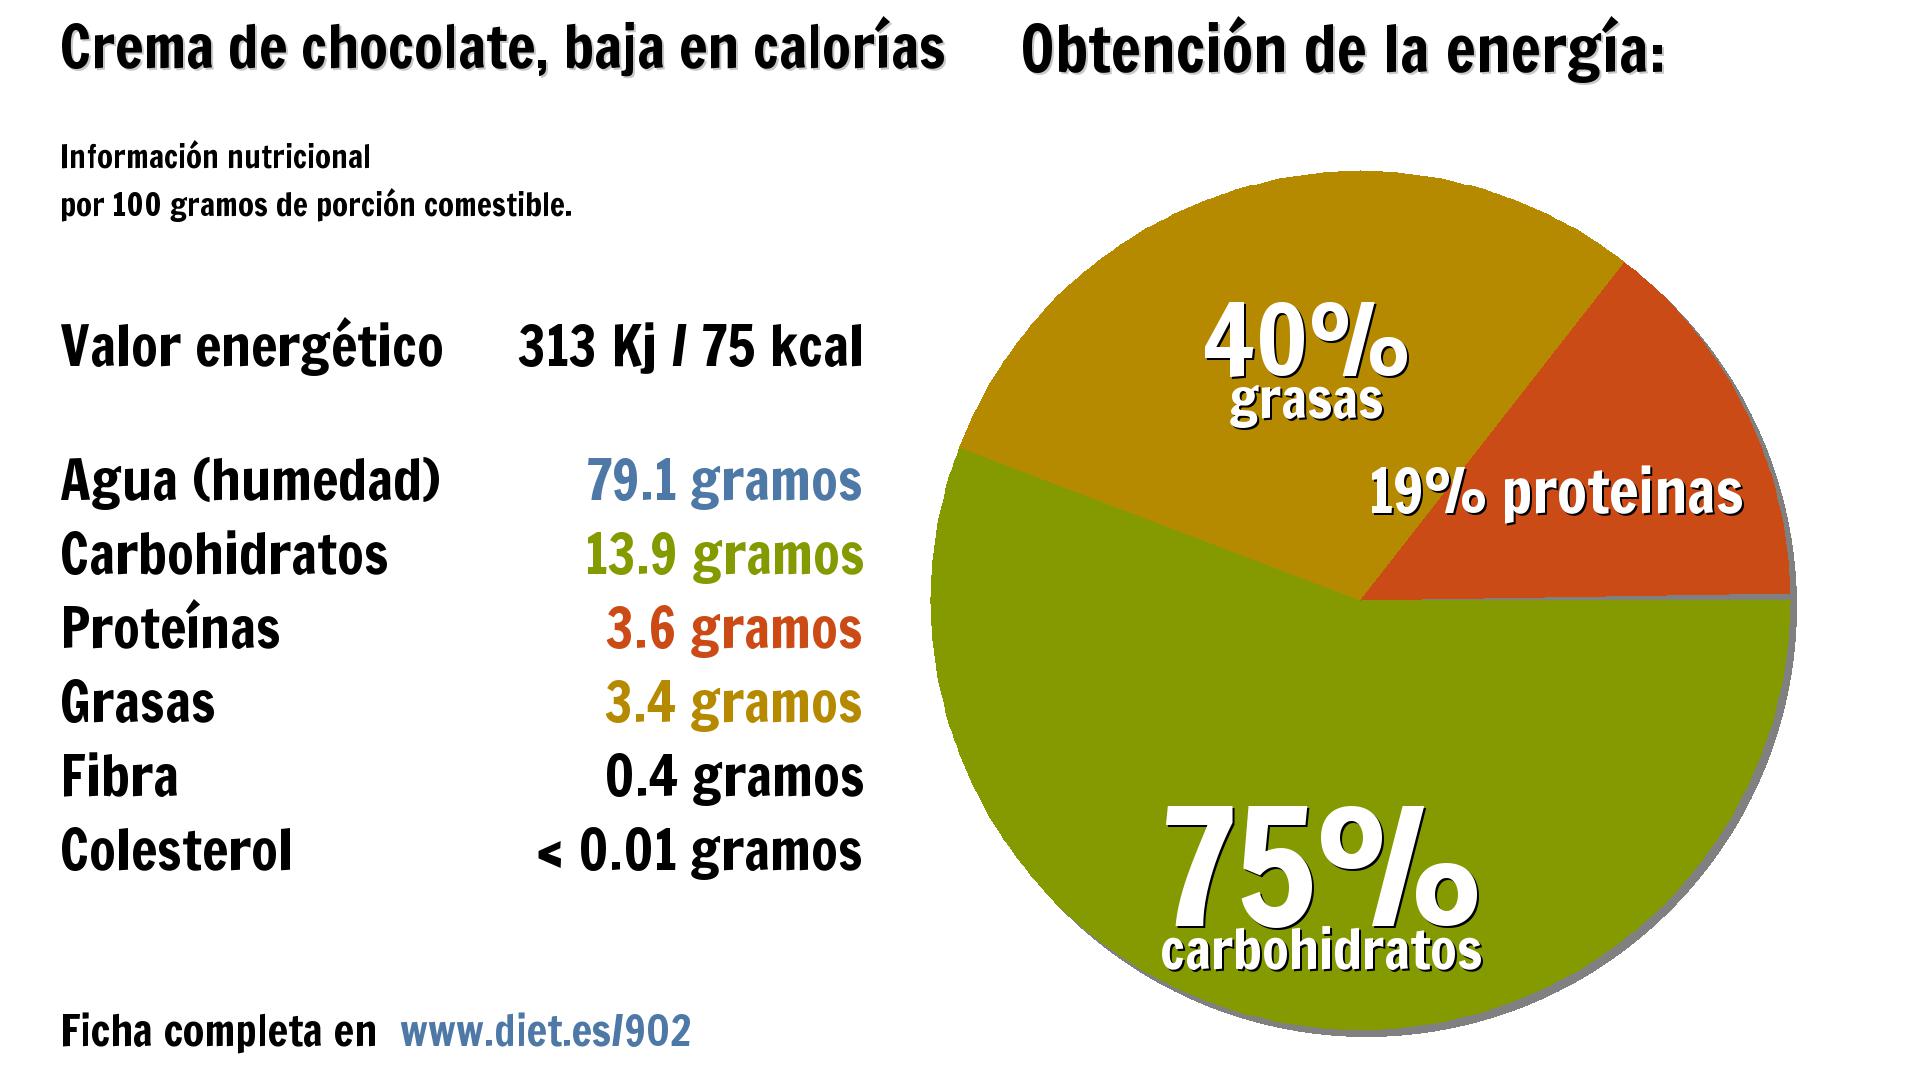 Crema de chocolate, baja en calorías: energía 313 Kj, agua 79 g., carbohidratos 14 g., proteínas 4 g. y grasas 3 g.